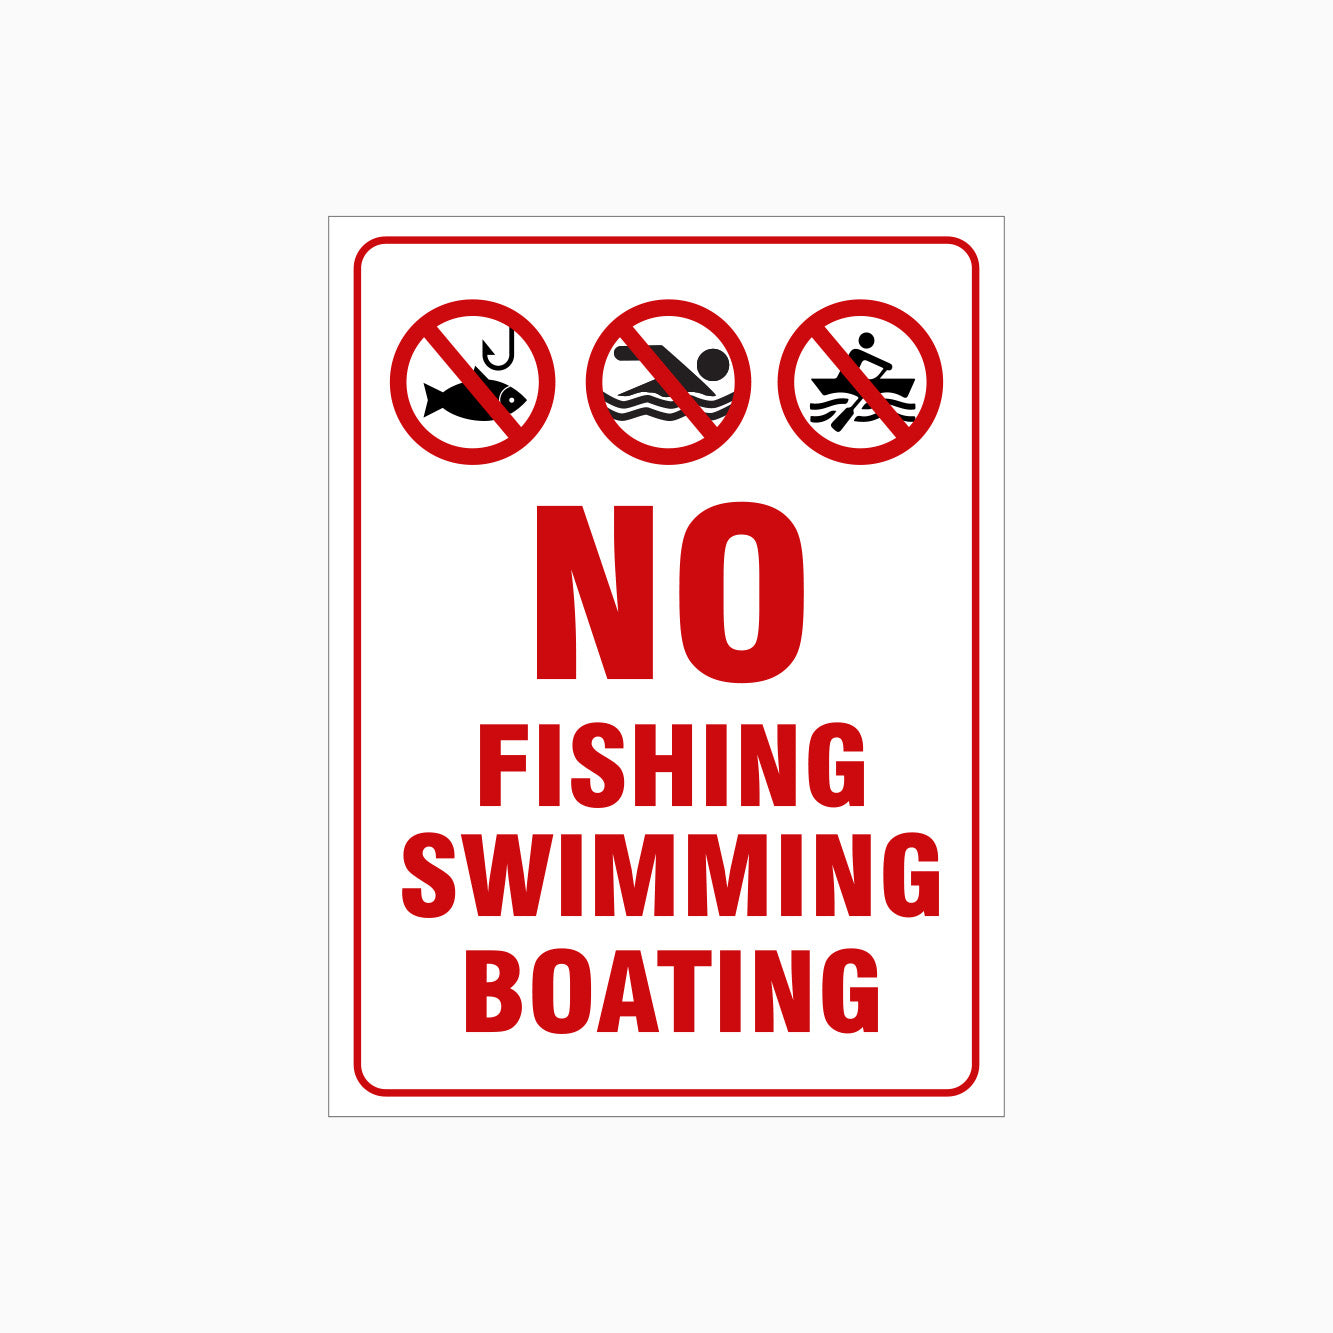 NO FISHING, SWIMMING AND BOATING SIGN